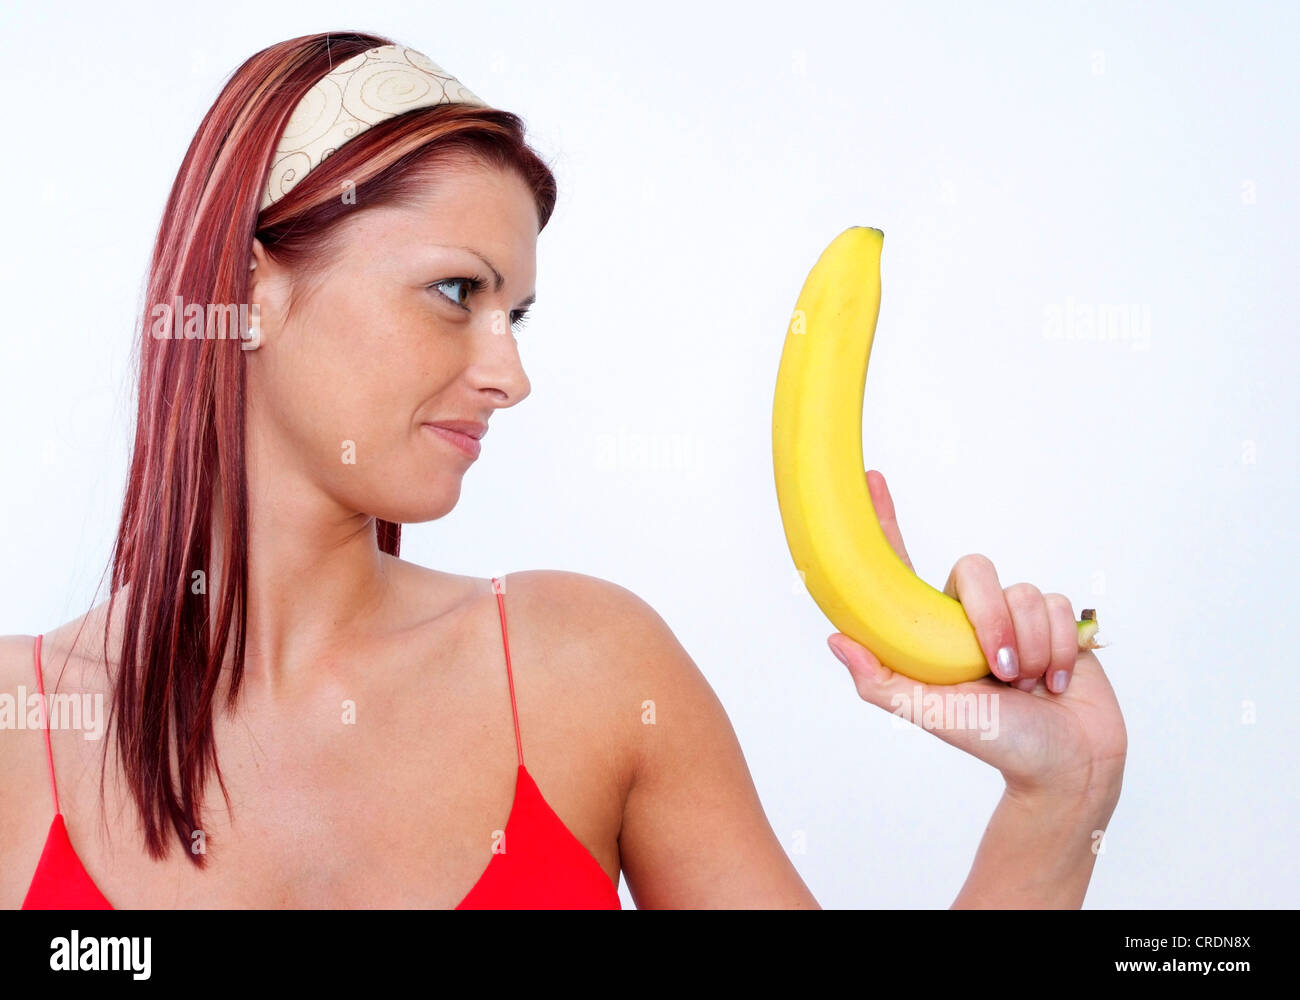 Donna con banana Foto stock - Alamy